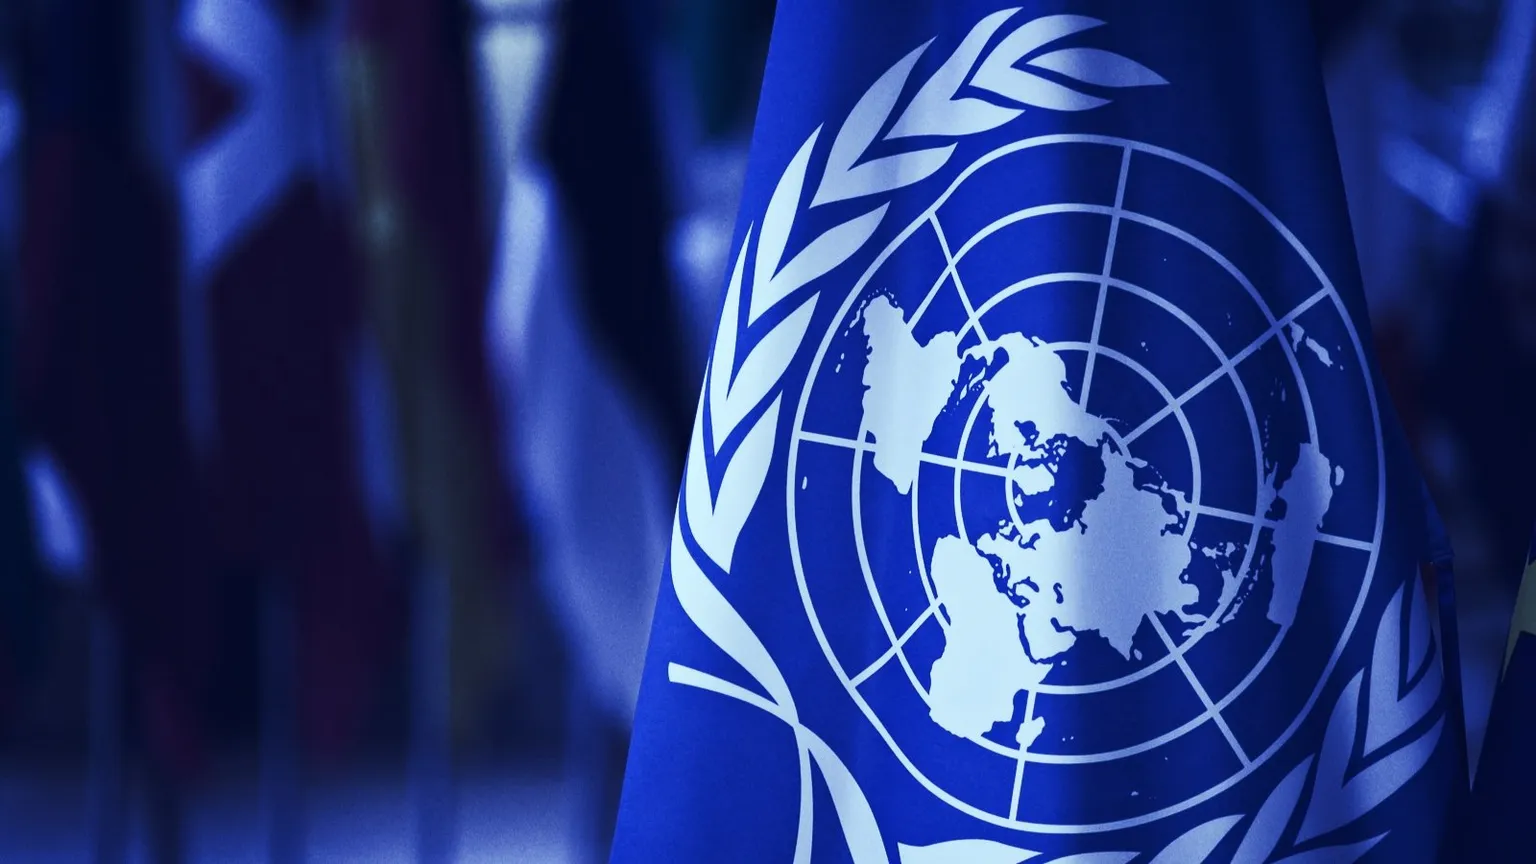 La bandera de la ONU. Imagen: Shutterstock